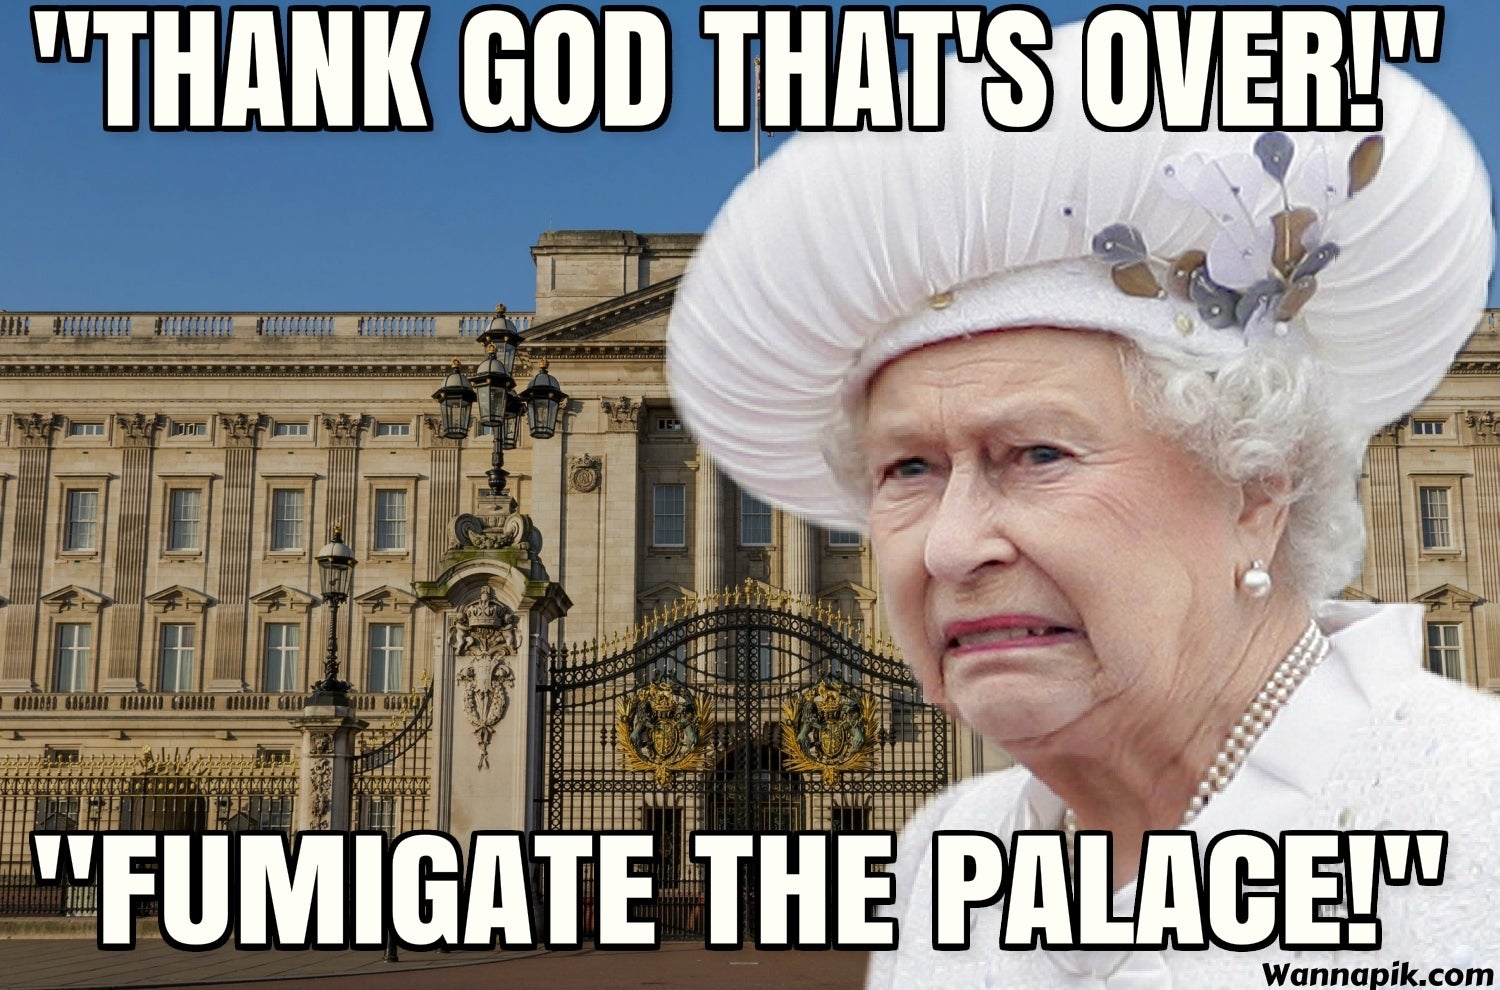 buckingham palace - "Thank God That'S Over!" 20 . 0090 500 b 09.006 000 00267 ooooooo "Fumigate The Palace!" Wannapik.com